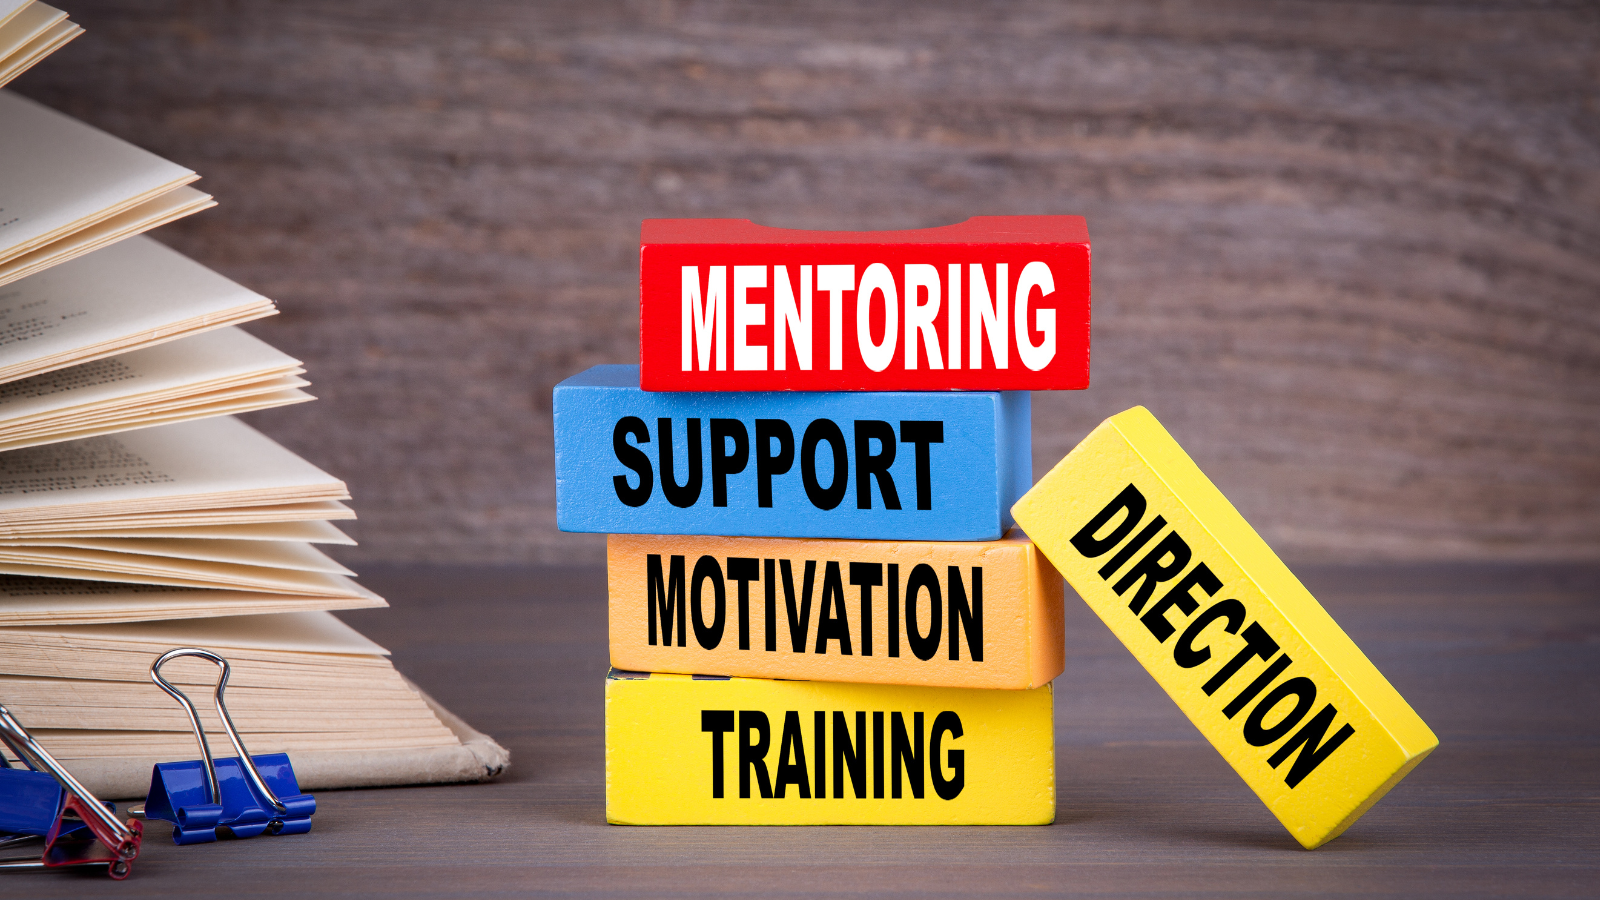 Purpose of Mentoring